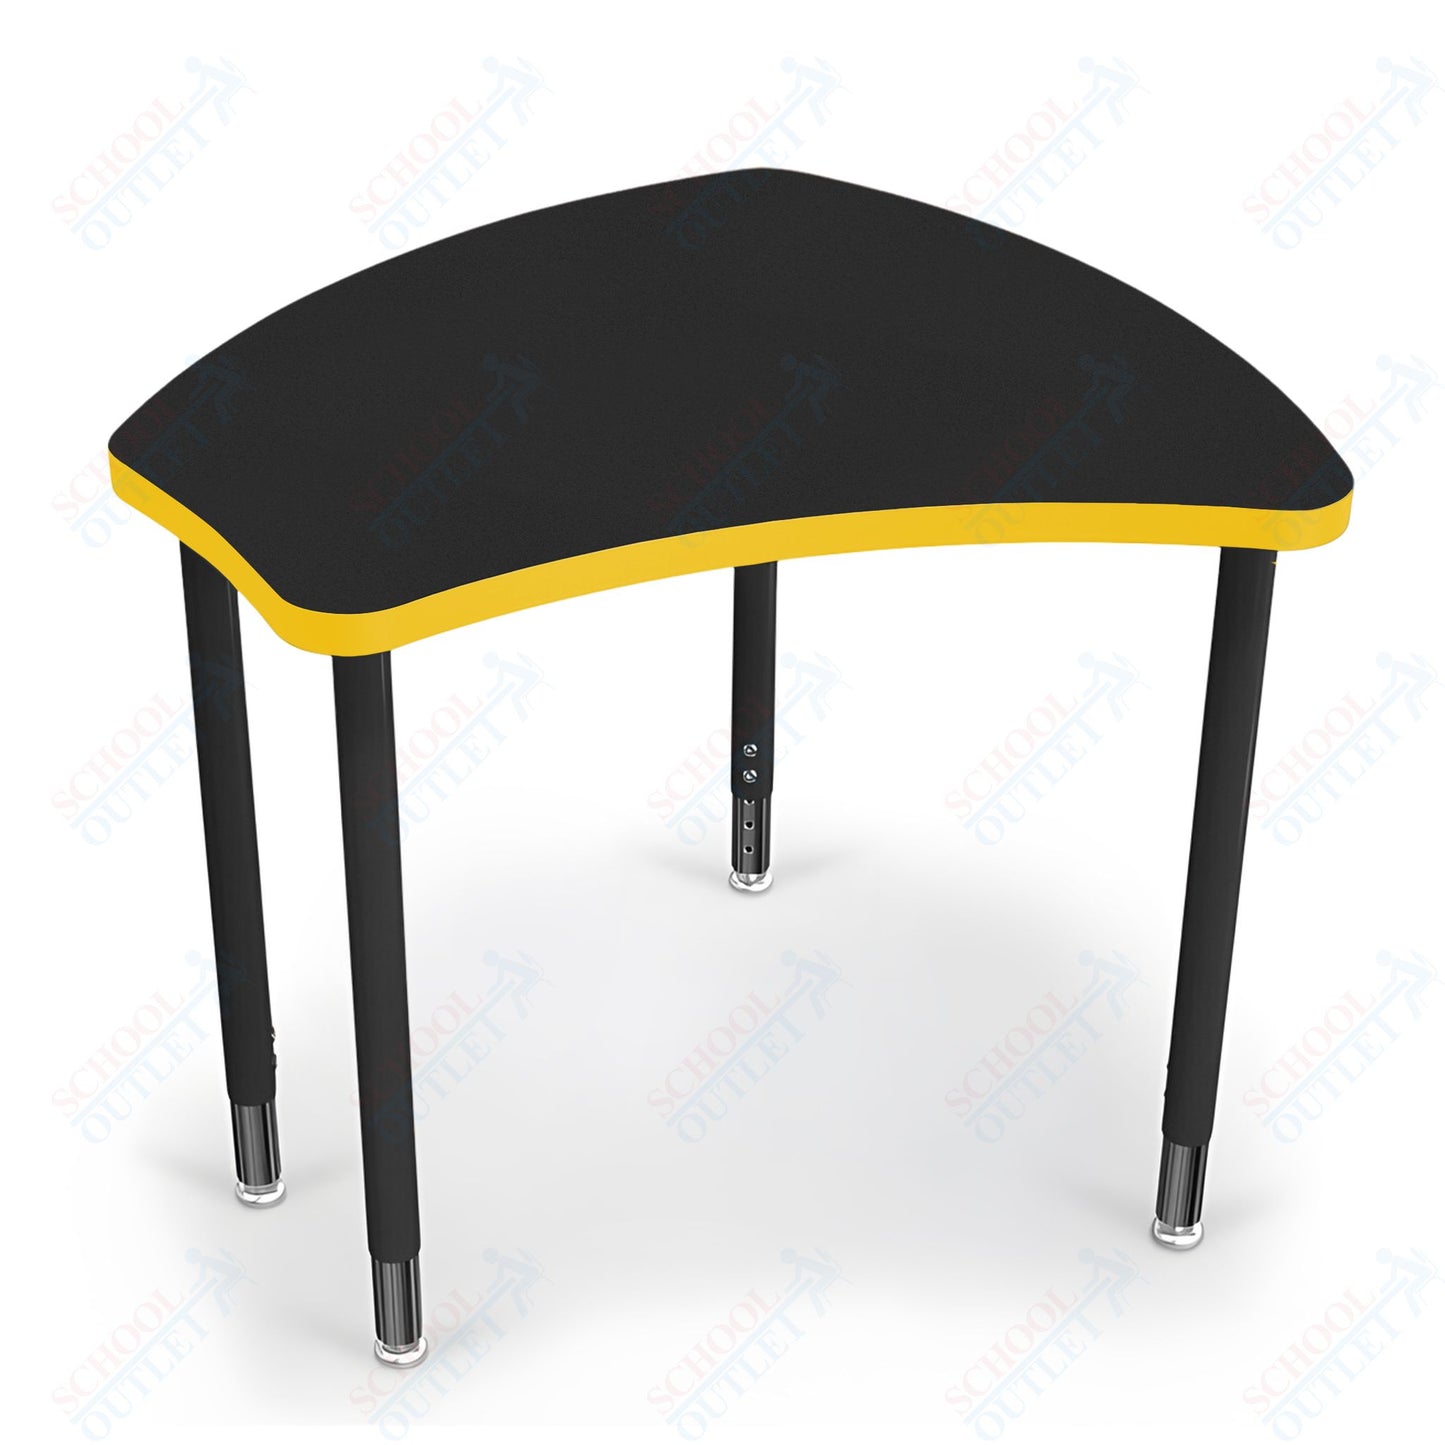 Mooreco Small Hierarchy Shape Standard Desk Adjustable Height 22" - 32" - Black Leg - 11336X